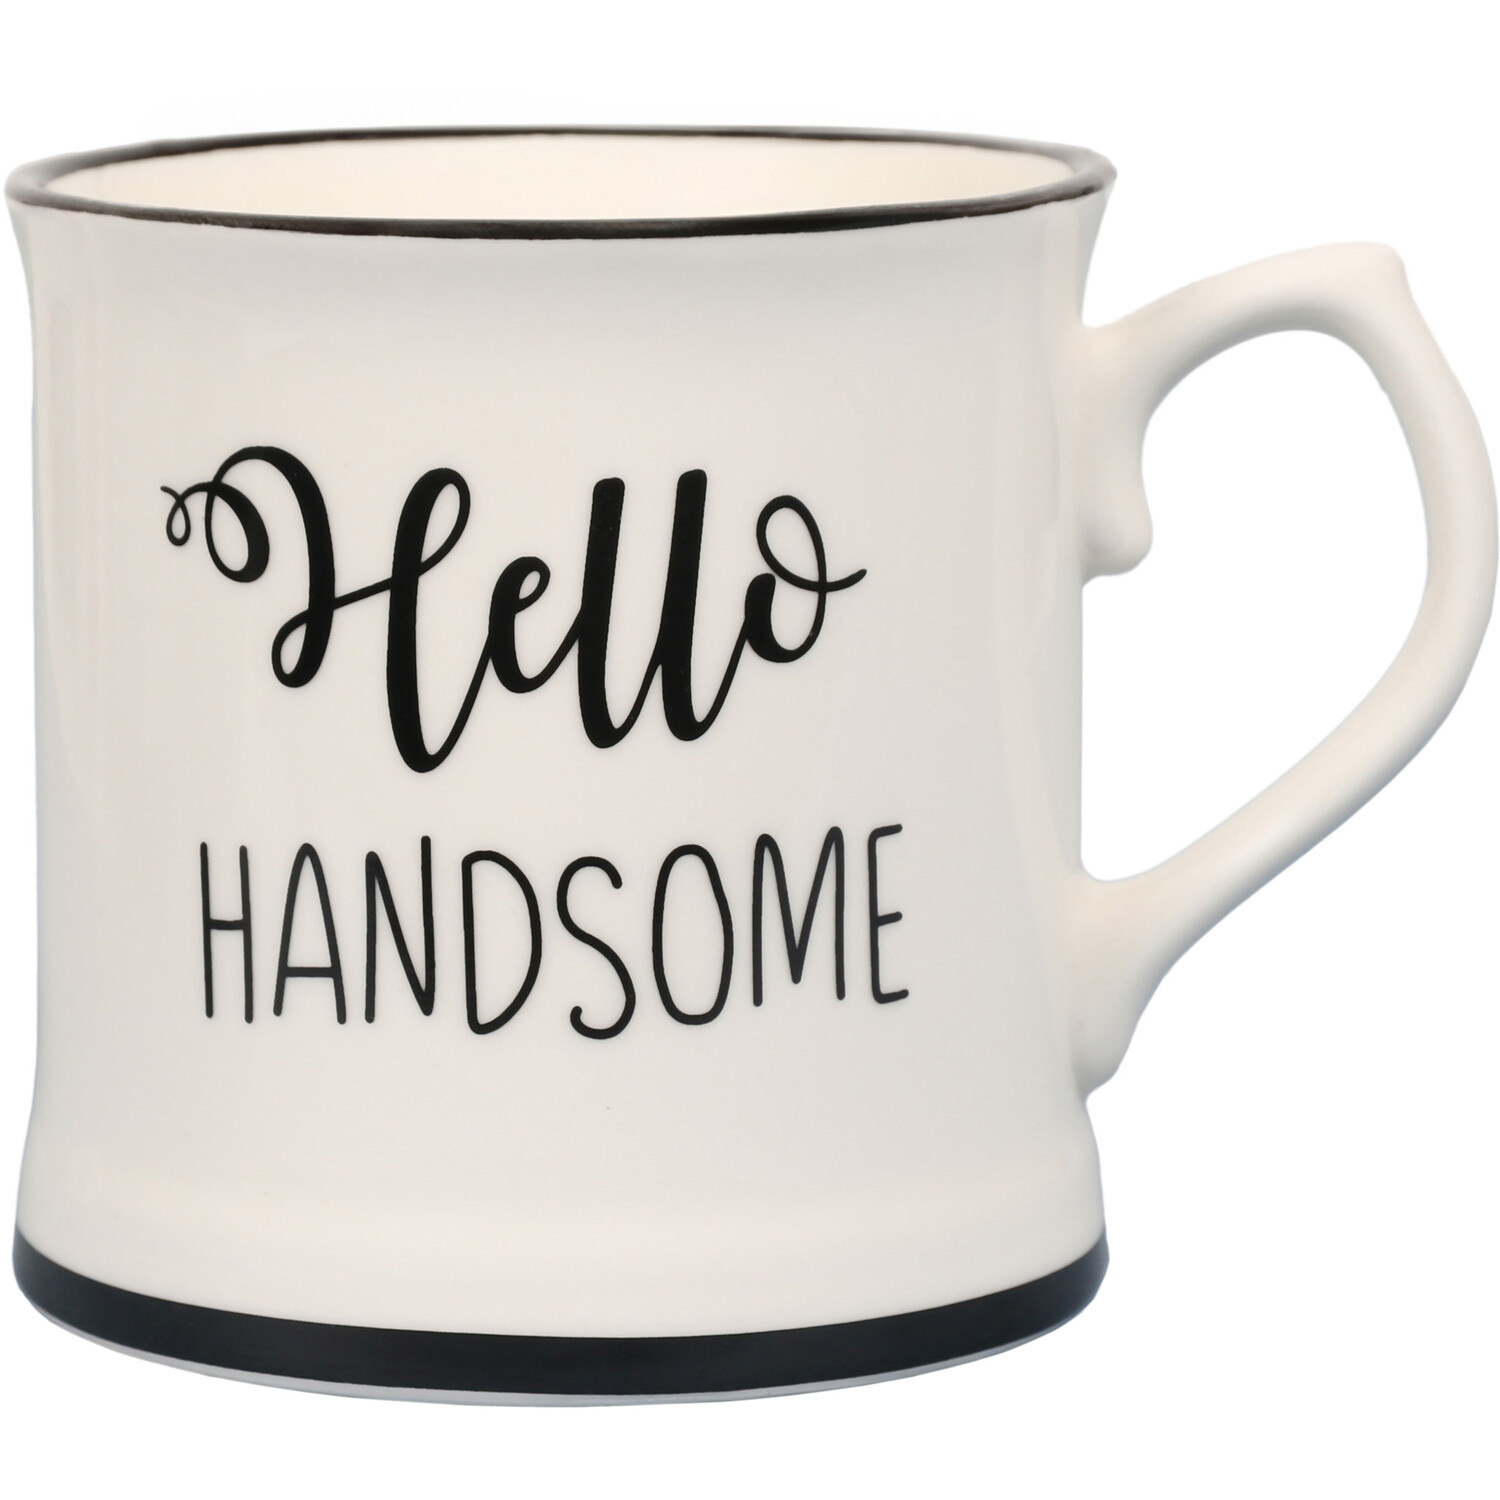 Hello Handsome Tankard Mug - White Image 1